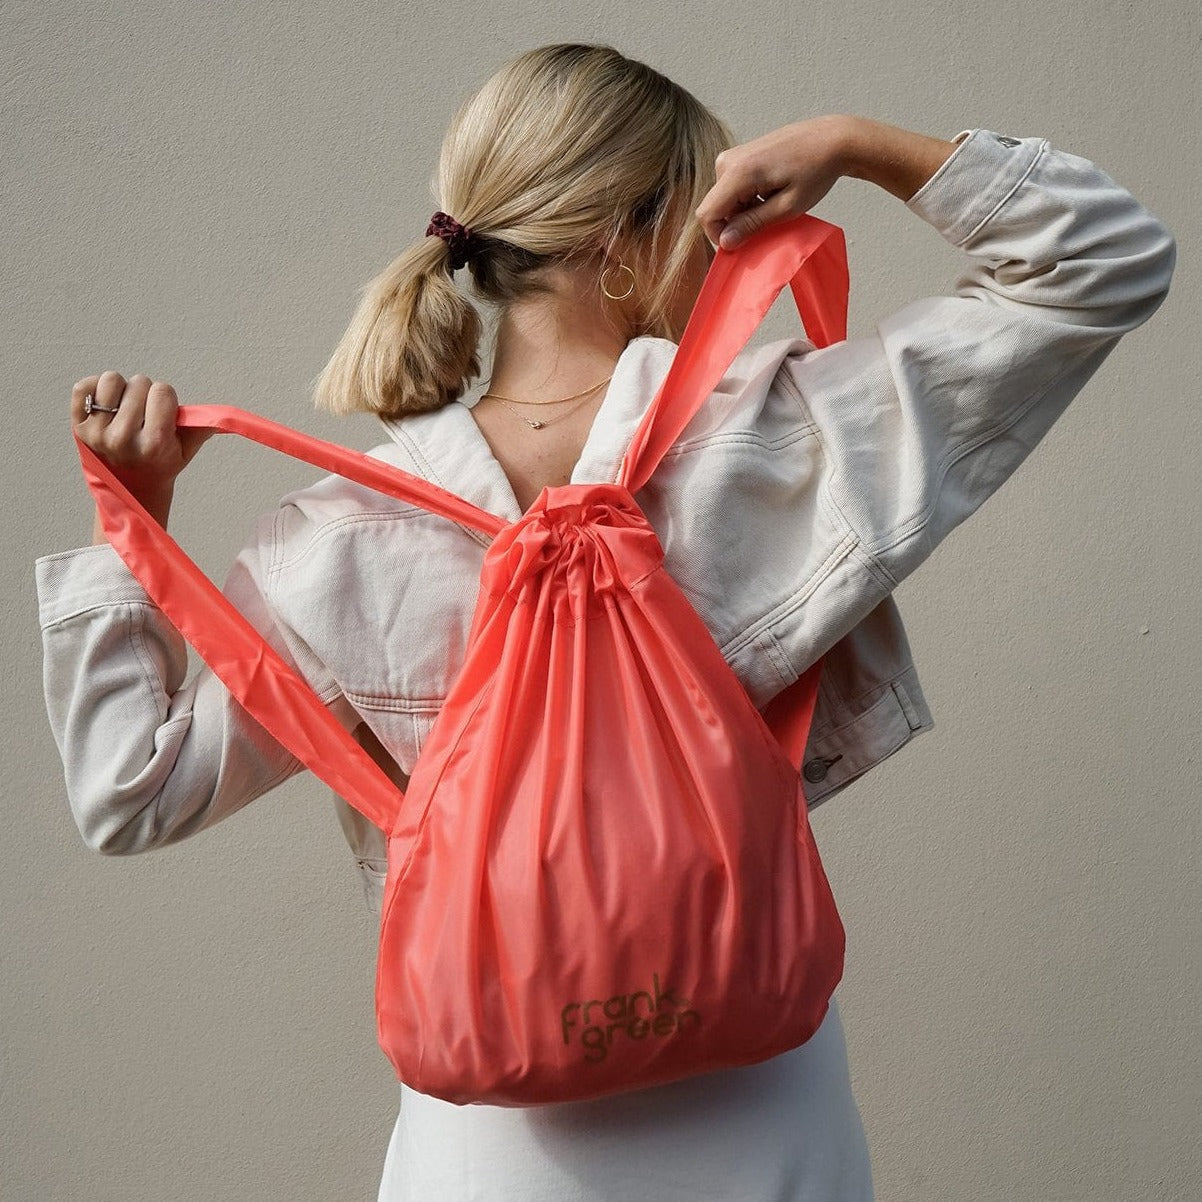 Frank Green Ultimate Reusable 3-in-1 Bag - Reusable Tote Bag, Backpack, Shopping Bag, Multiple Colors